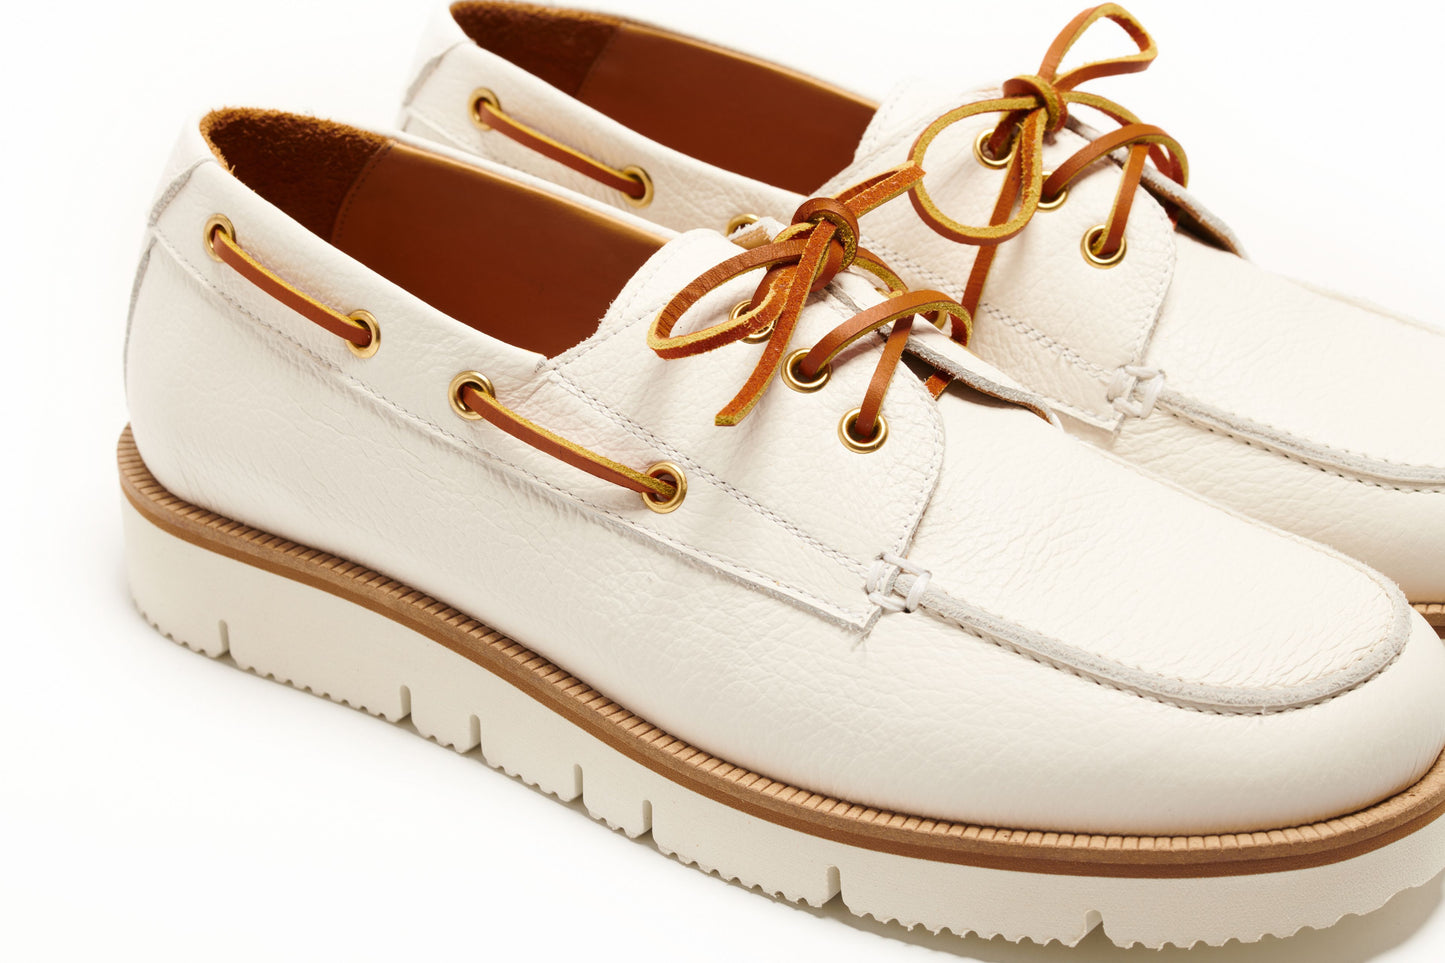 Hopkins Men's Boat Shoes - White